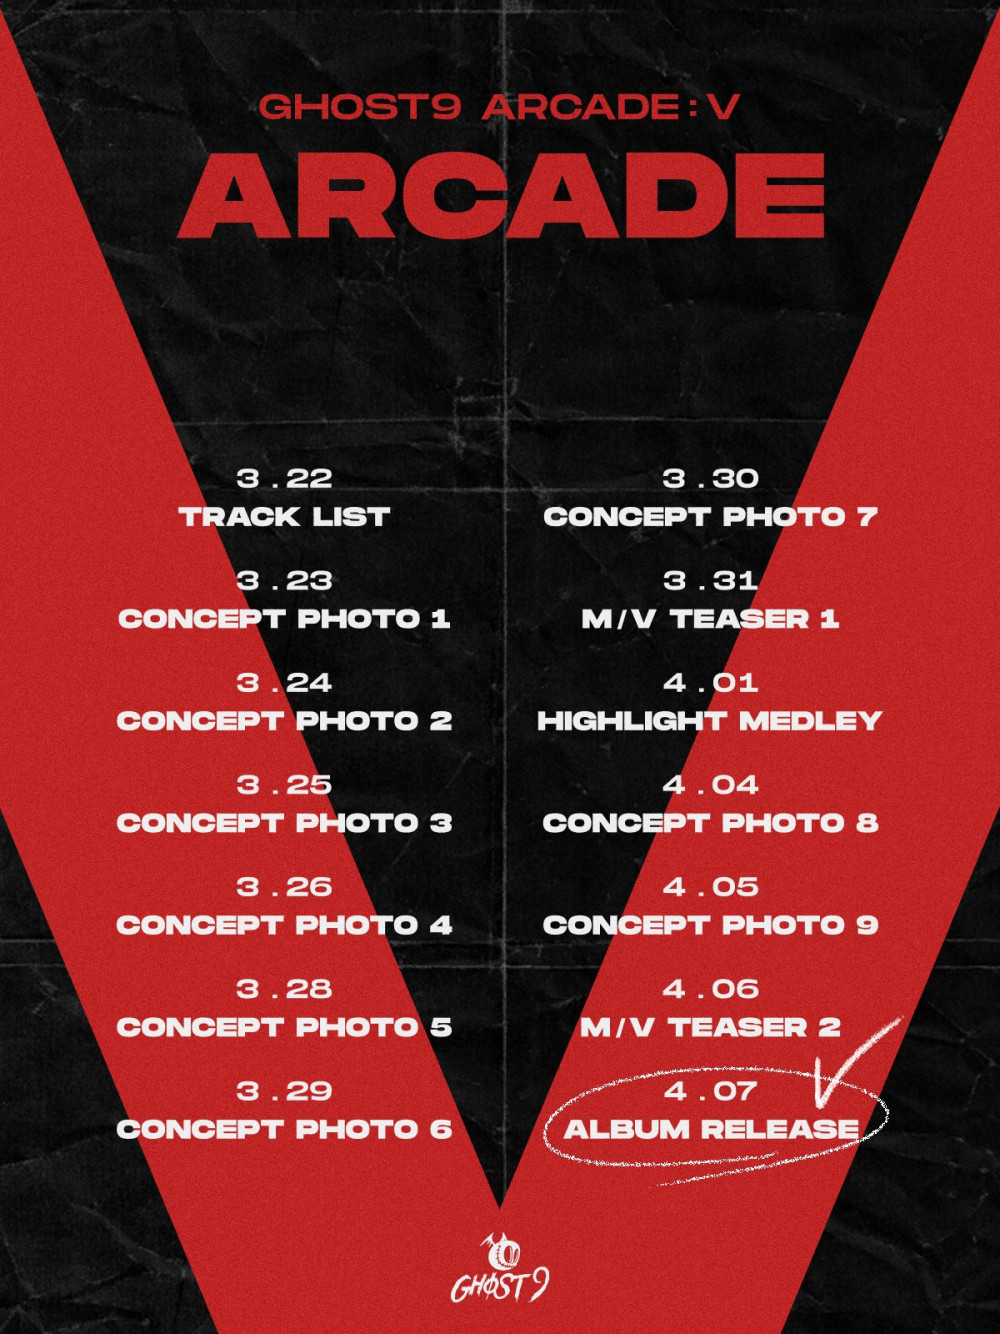 [Камбэк] Ghost9 альбом «Arcade: V»: музыкальный клип